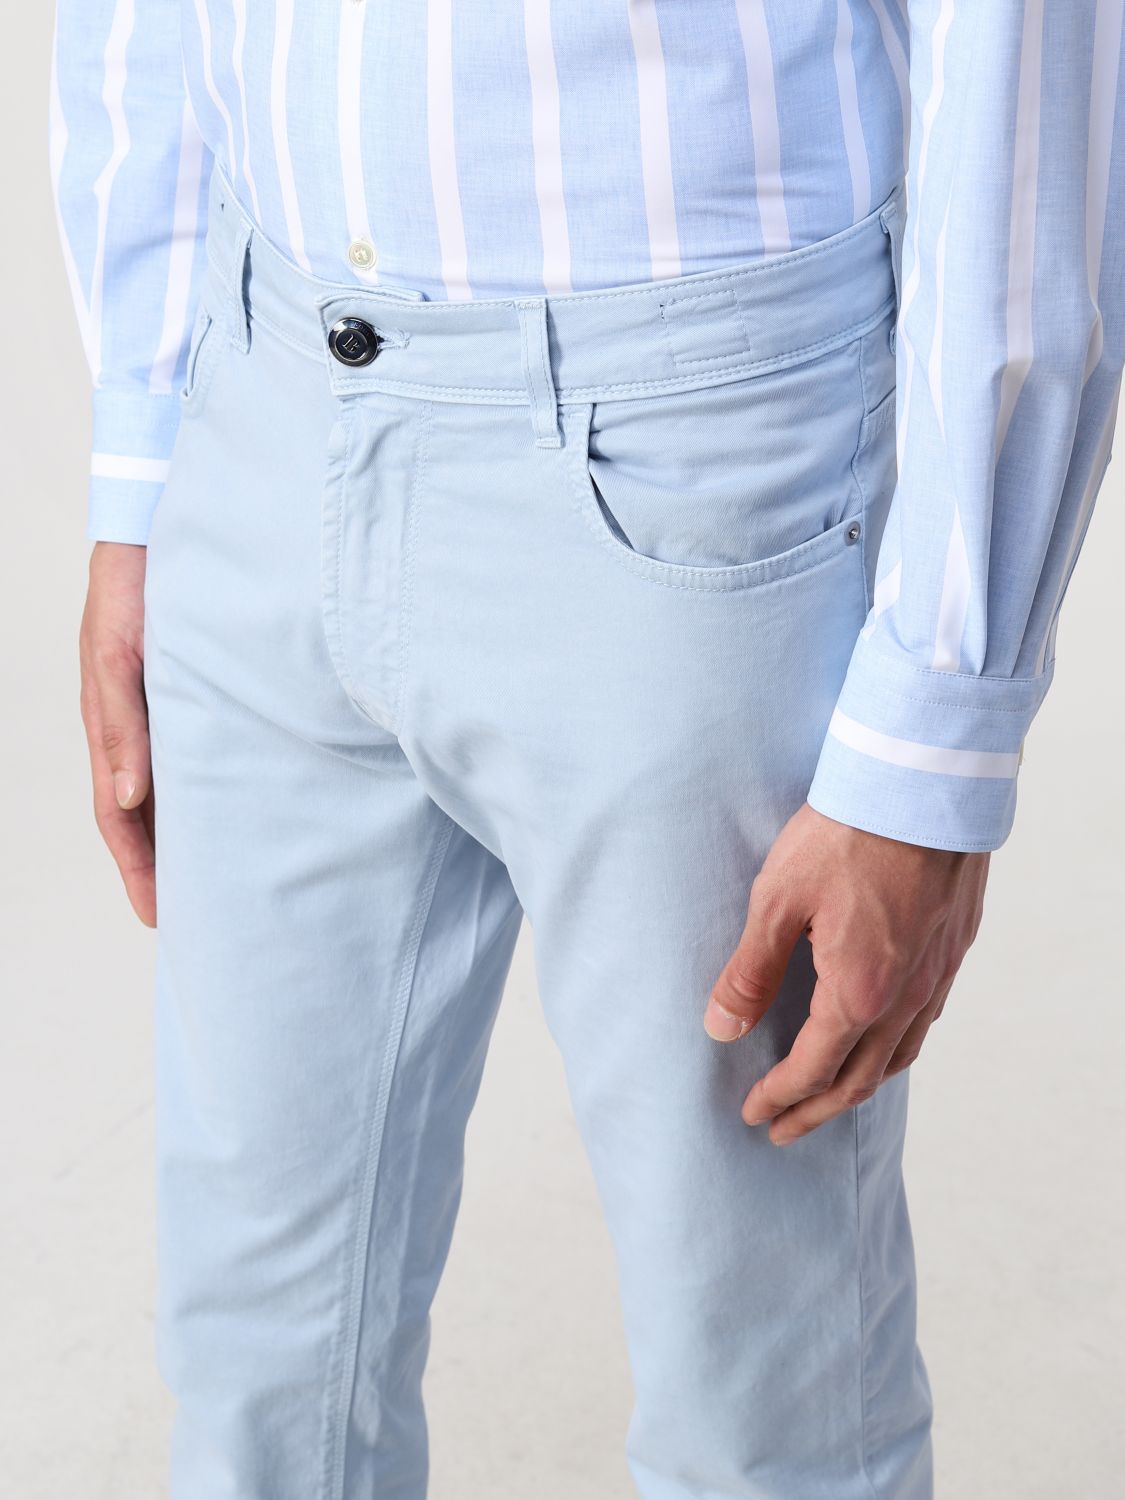 lend grown up have fun BOGGI MILANO: jeans in stretch Tencel cotton - Blue | Boggi Milano jeans  BO22P040501 online on GIGLIO.COM